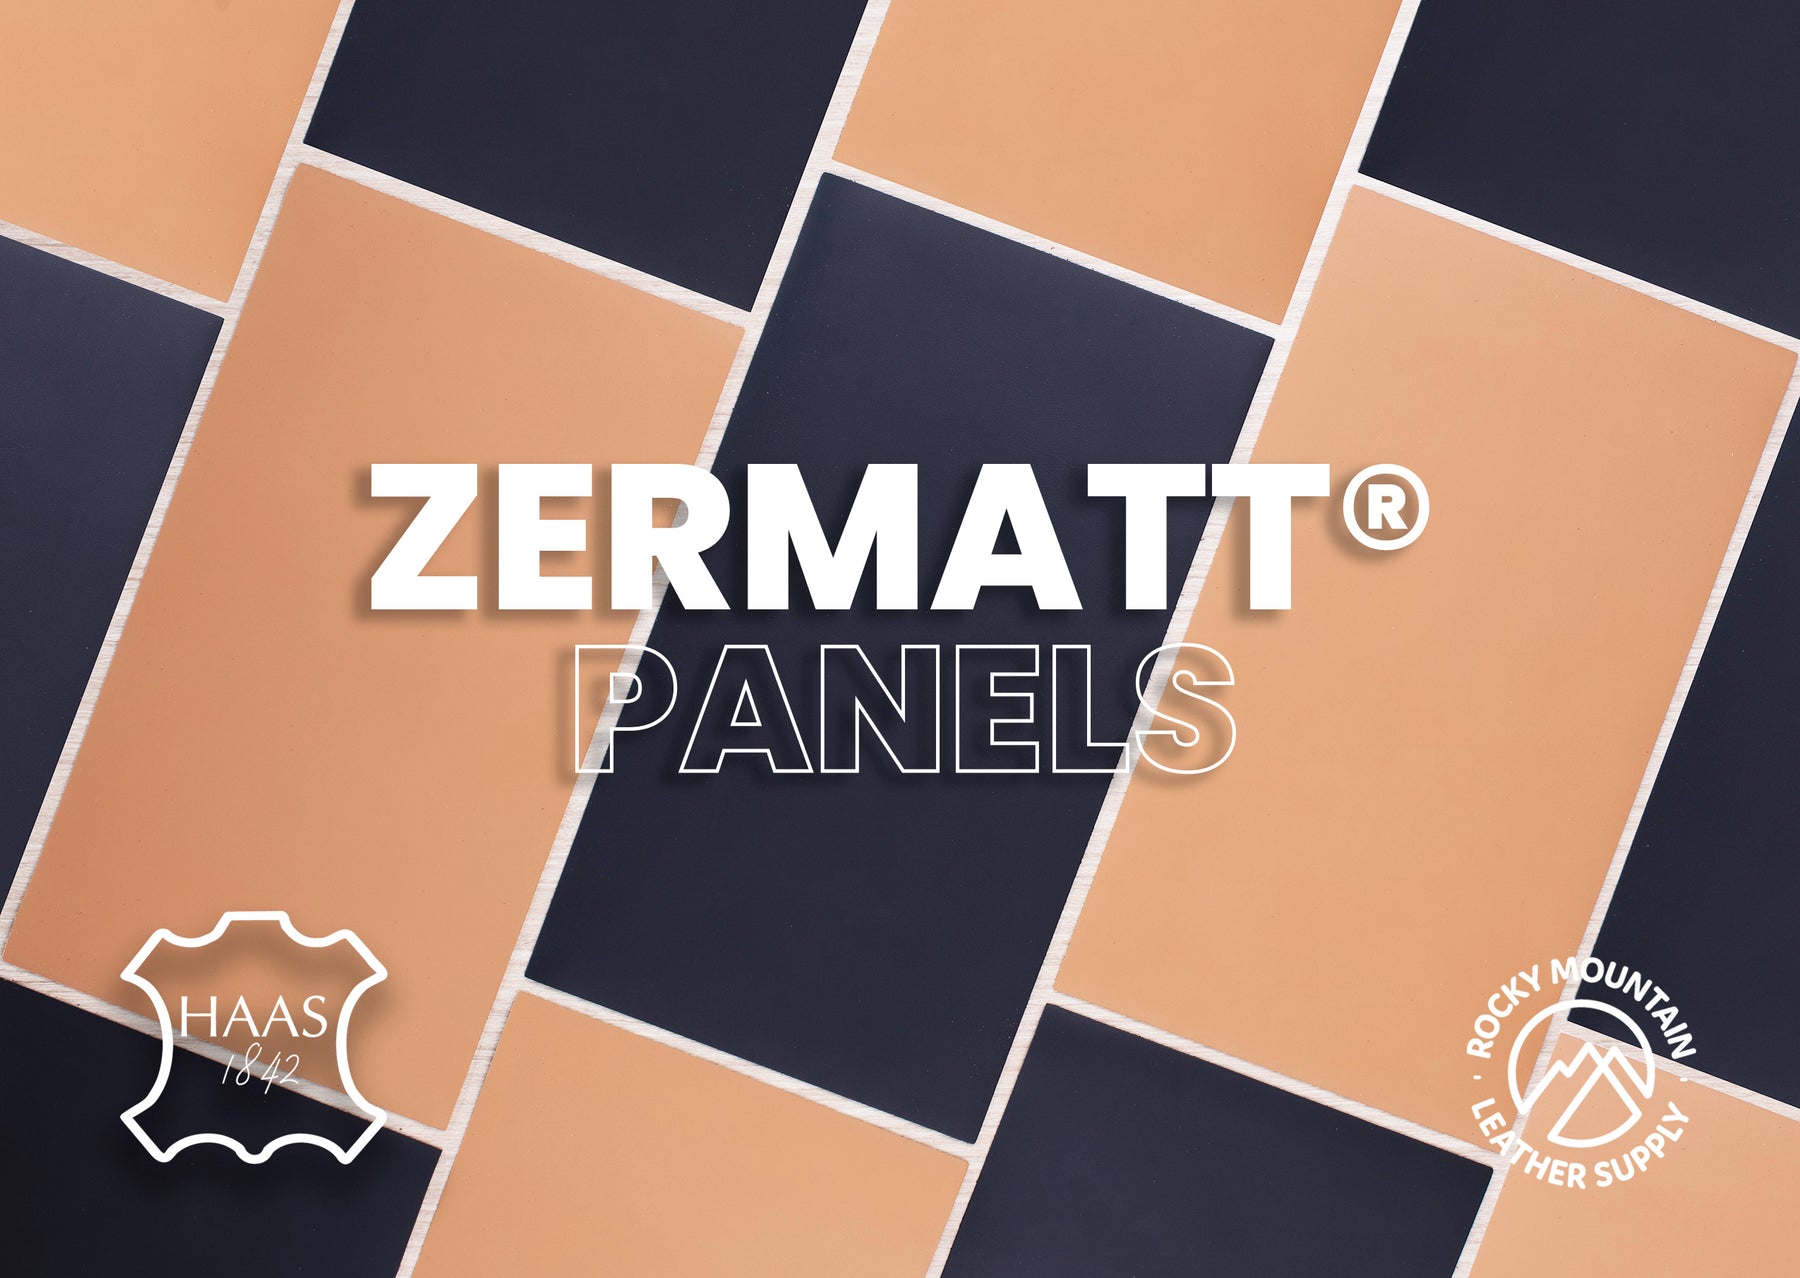 Tanneries Haas 🇫🇷 - Zermatt® - Luxury Calf Leather (PANELS)